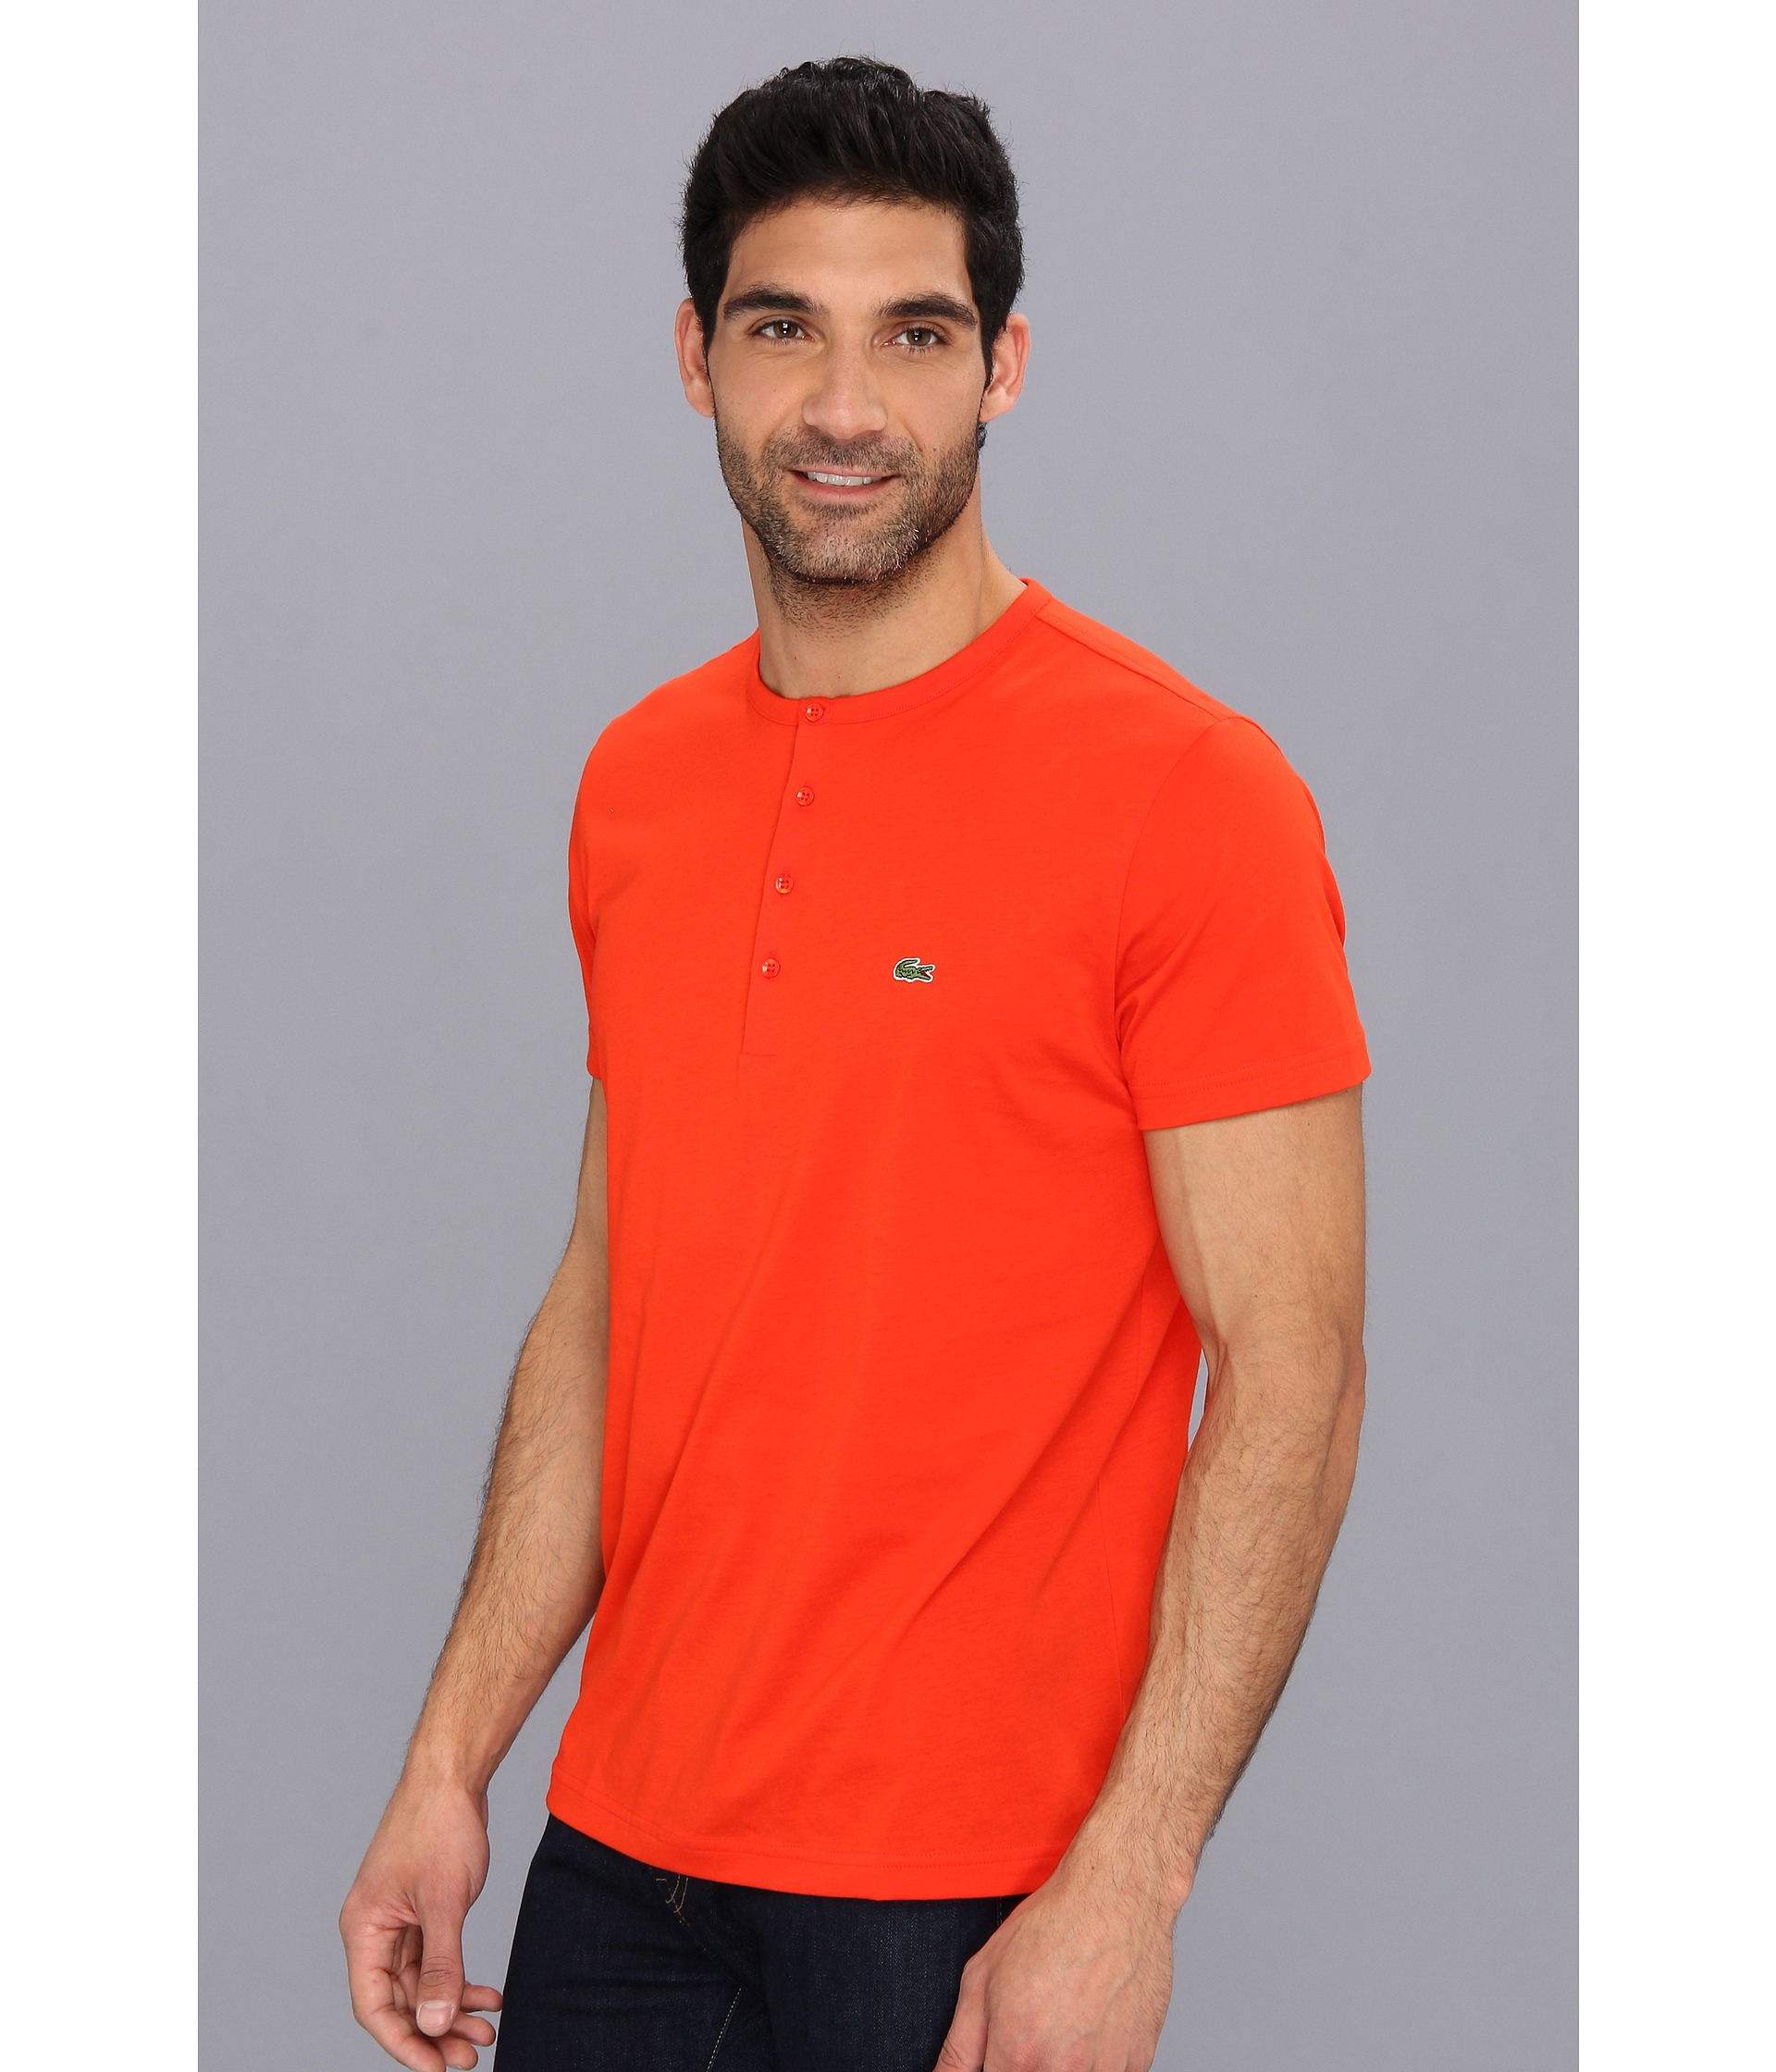 lacoste t shirt orange